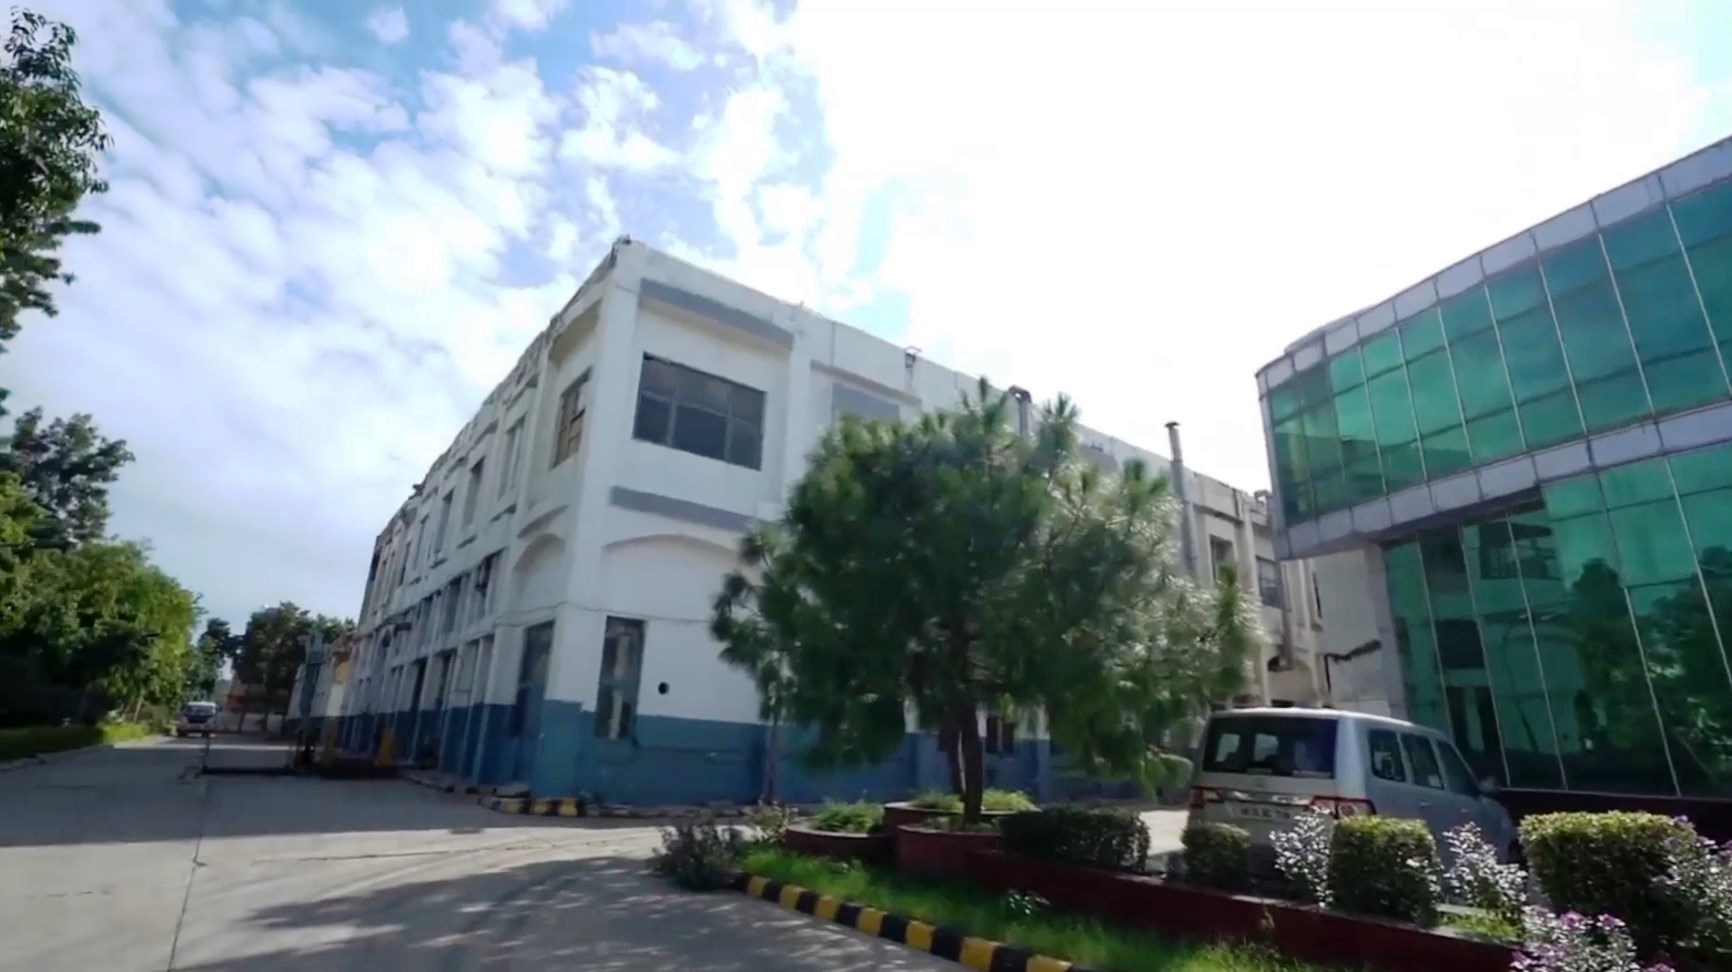 Industrial Property For Lease at IMT Manesar Gurugram